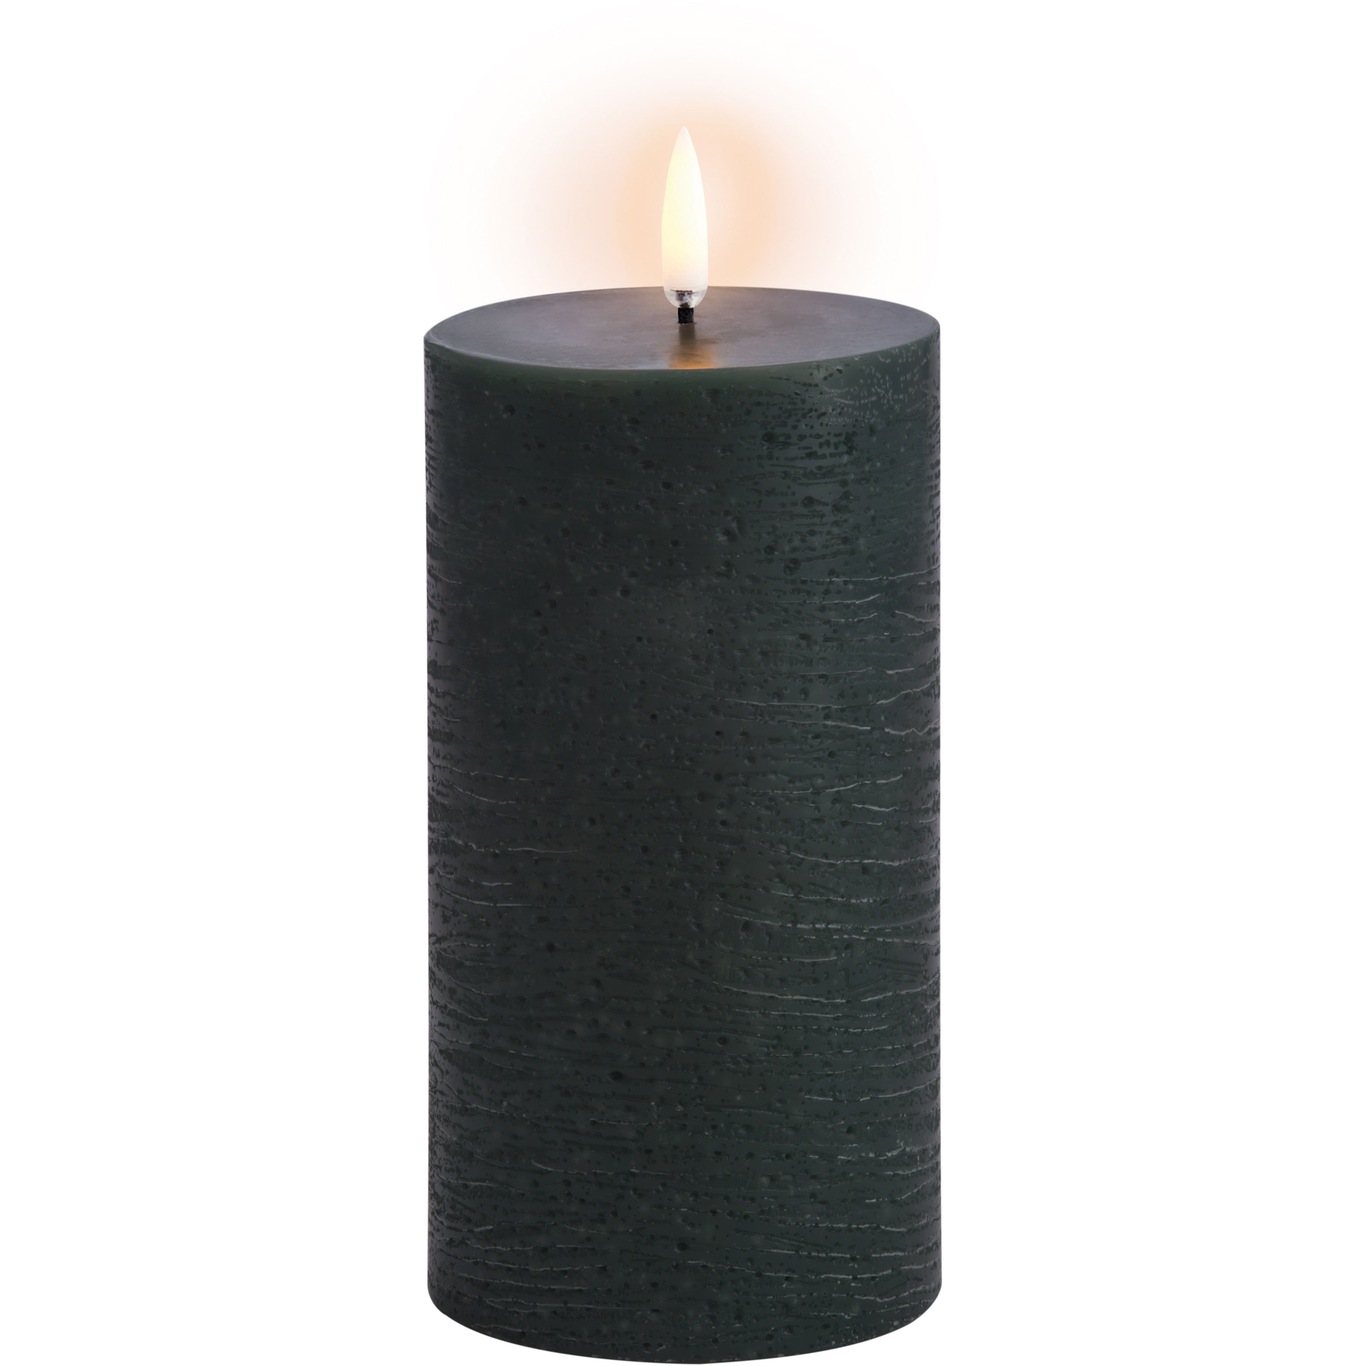 LED Pillar Candle 7,8x15,2 cm, Pine Green